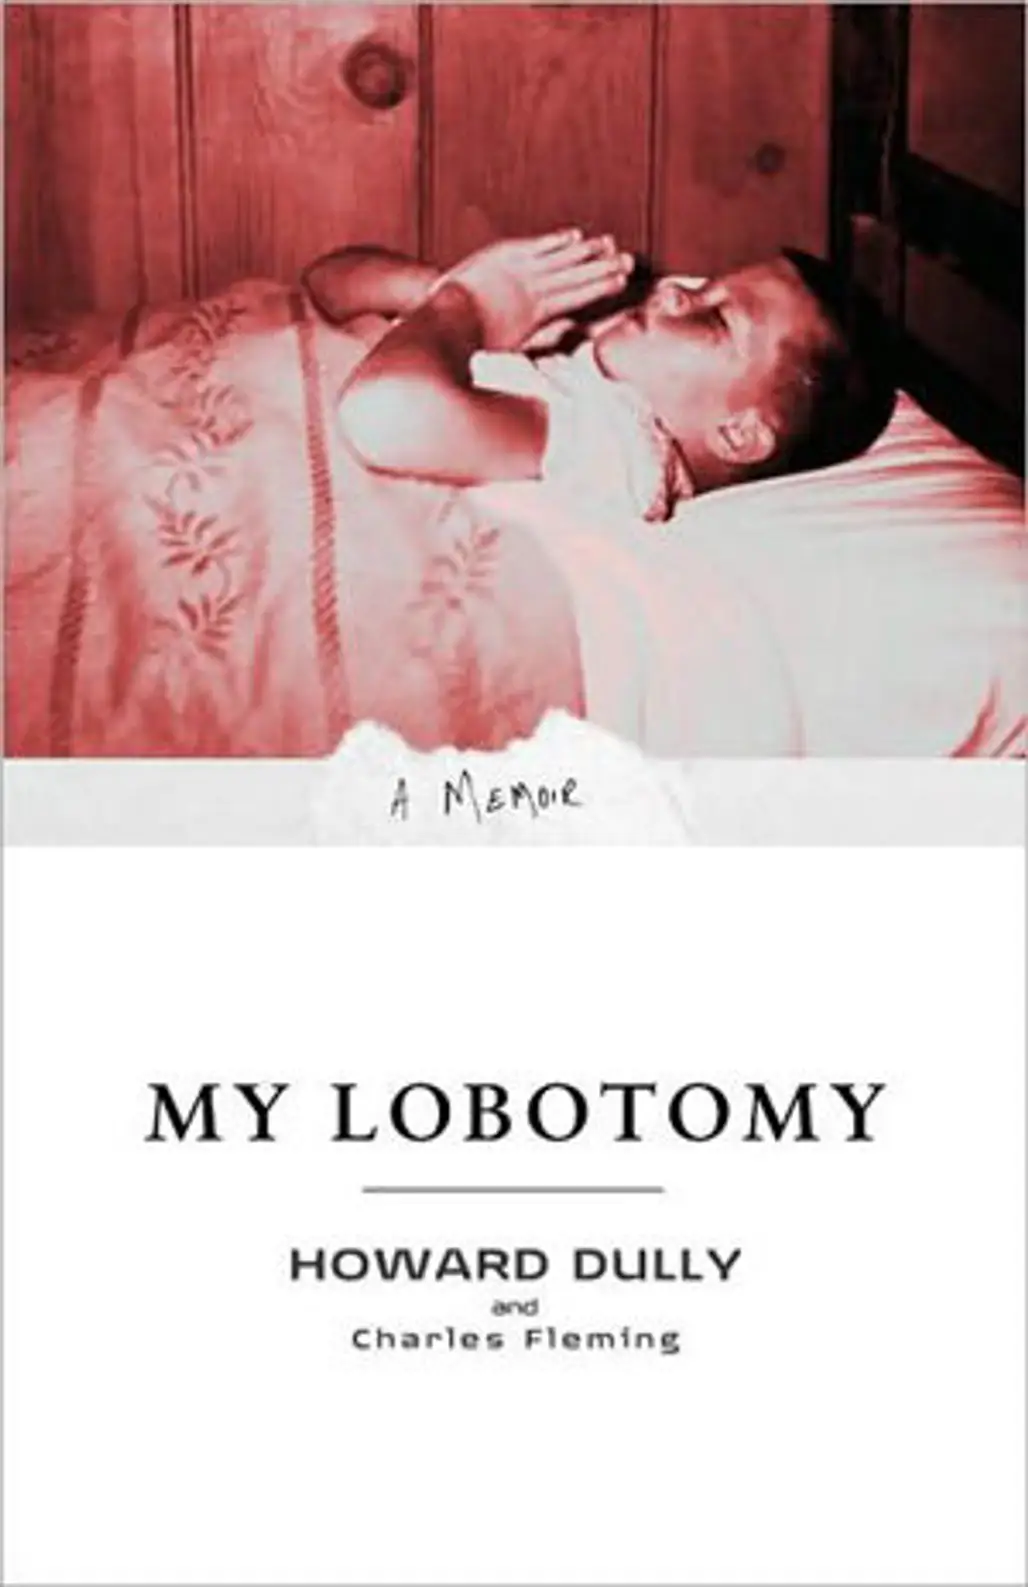 “My Lobotomy” by Howard Dully